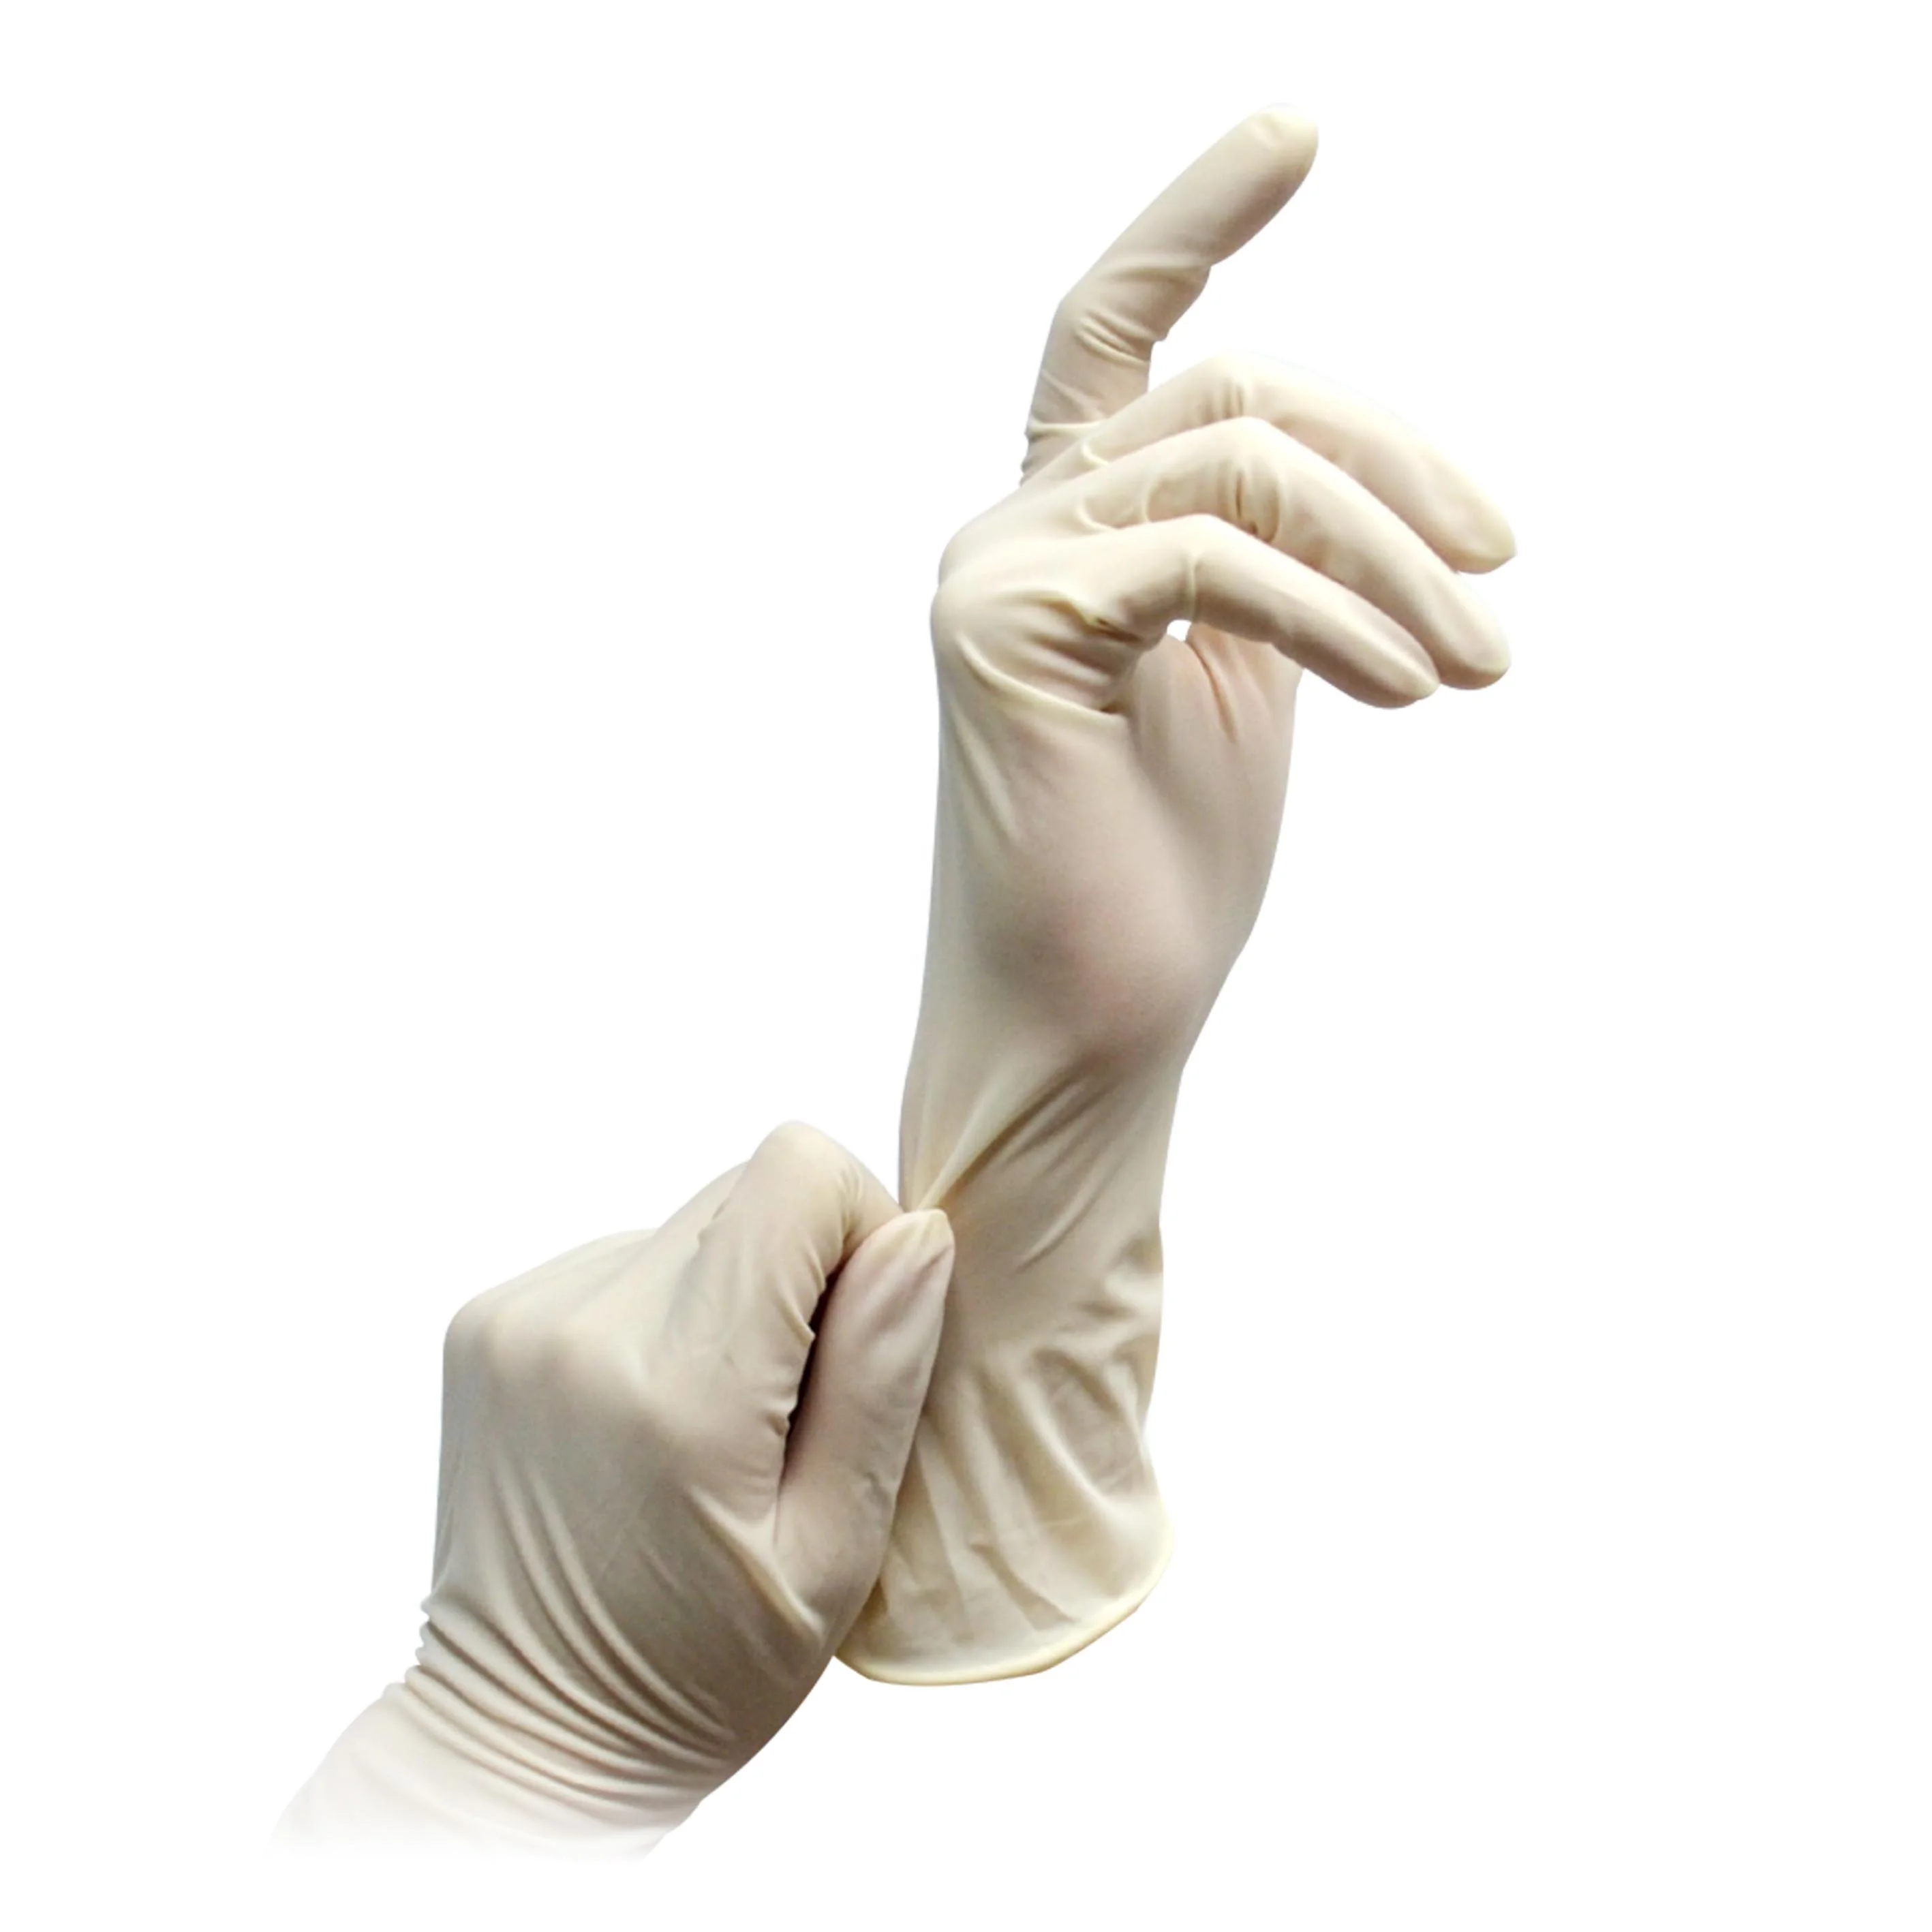 Disposable Latex/Vinyl Medical Examination Gloves in Malaysia